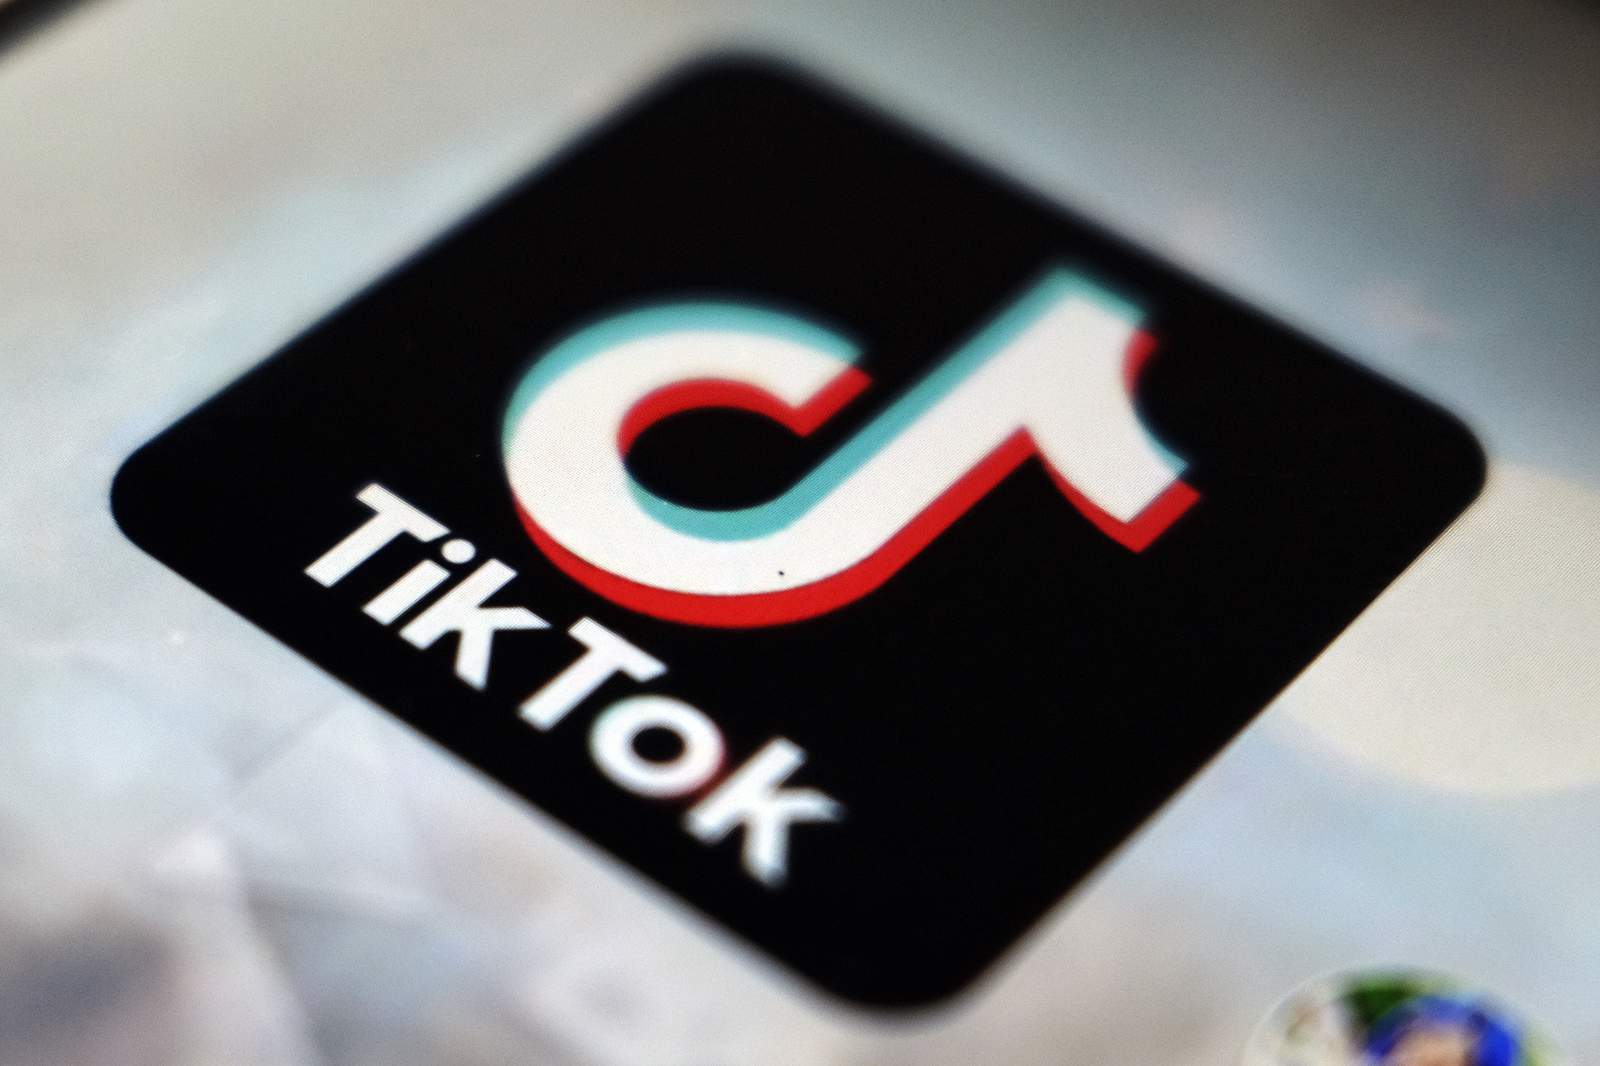 A year in 60 secs: TikTok lists top videos, creators of 2020